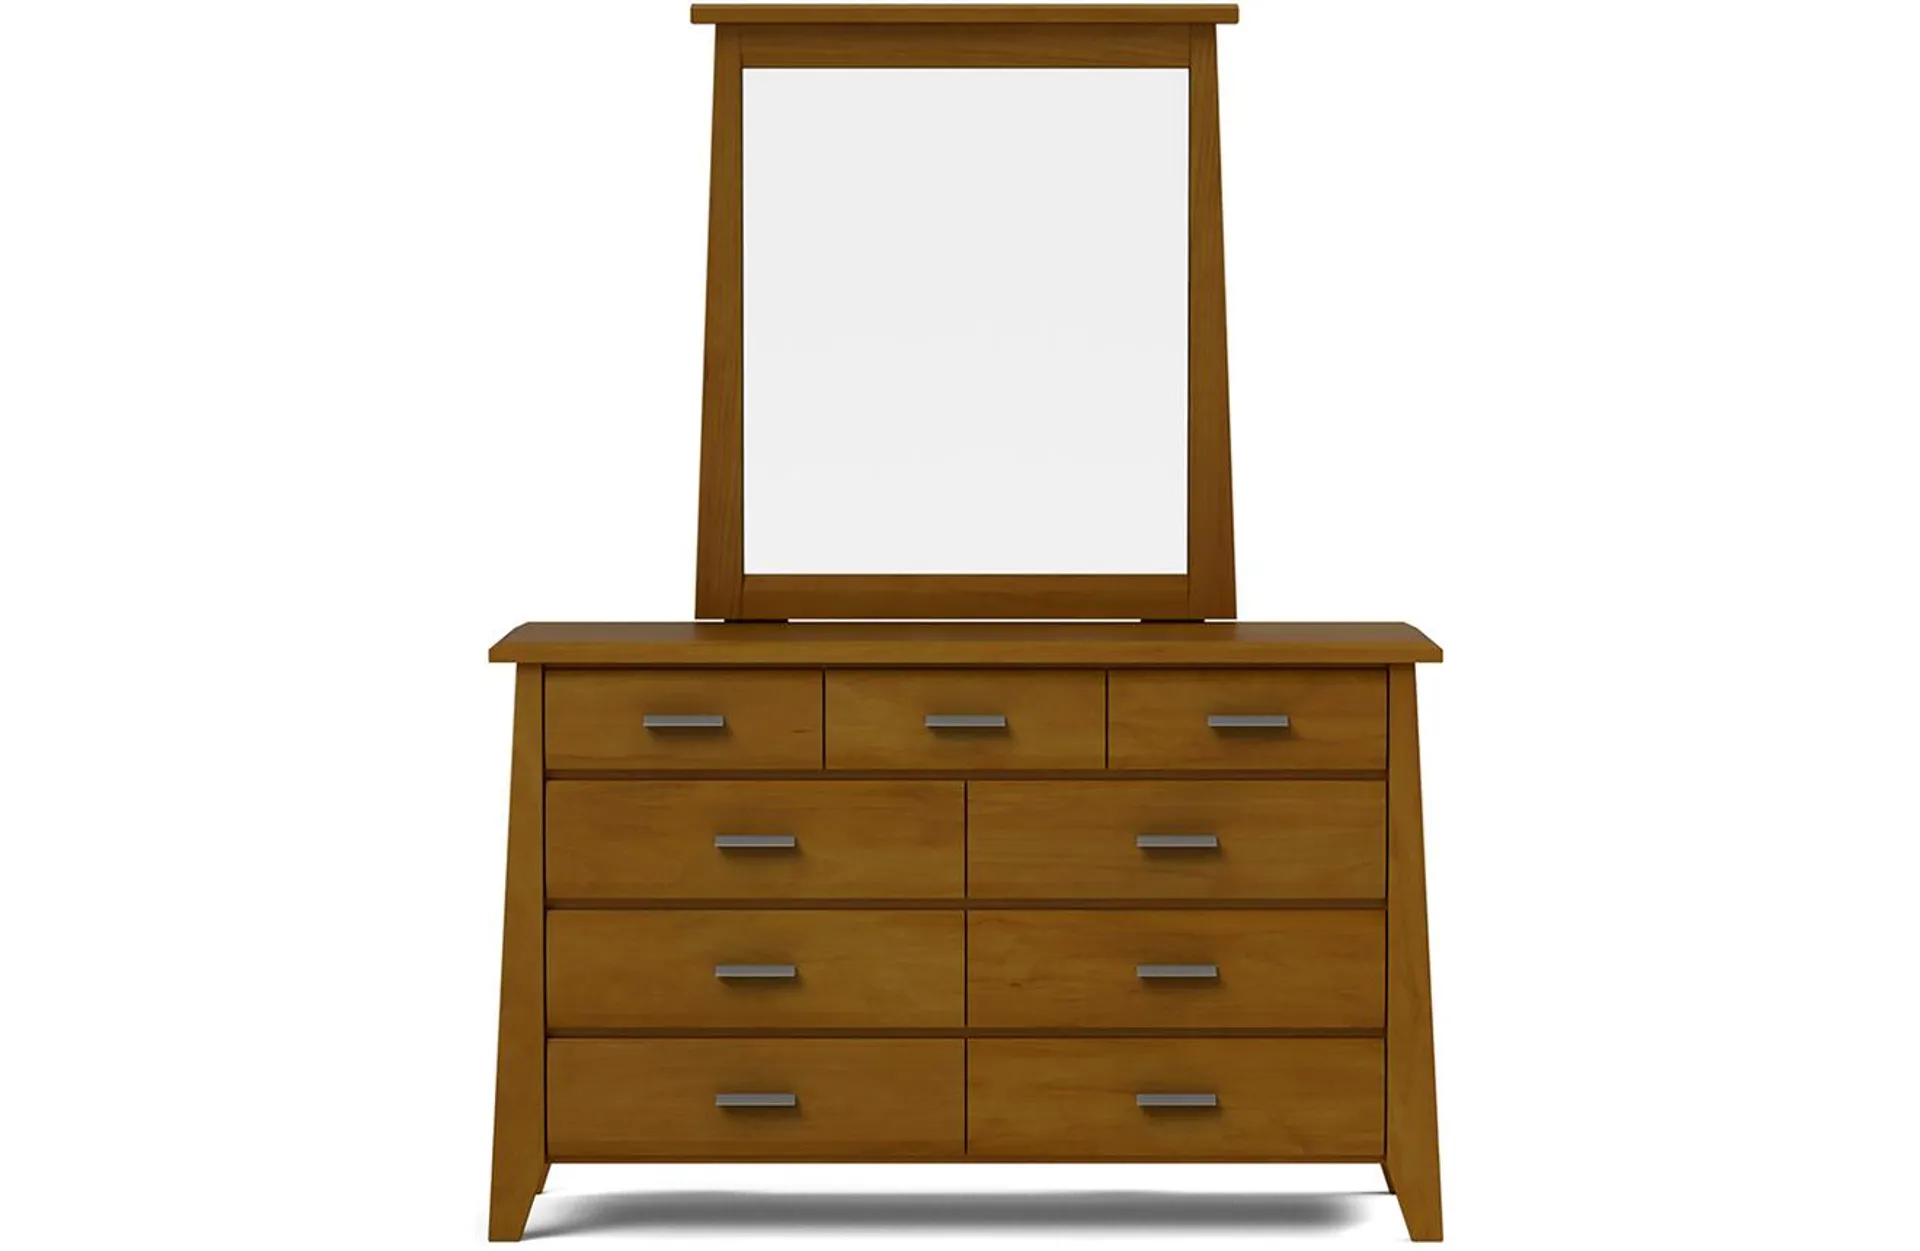 Verve 9 Drawer Dresser with Mirror - Old Rimu